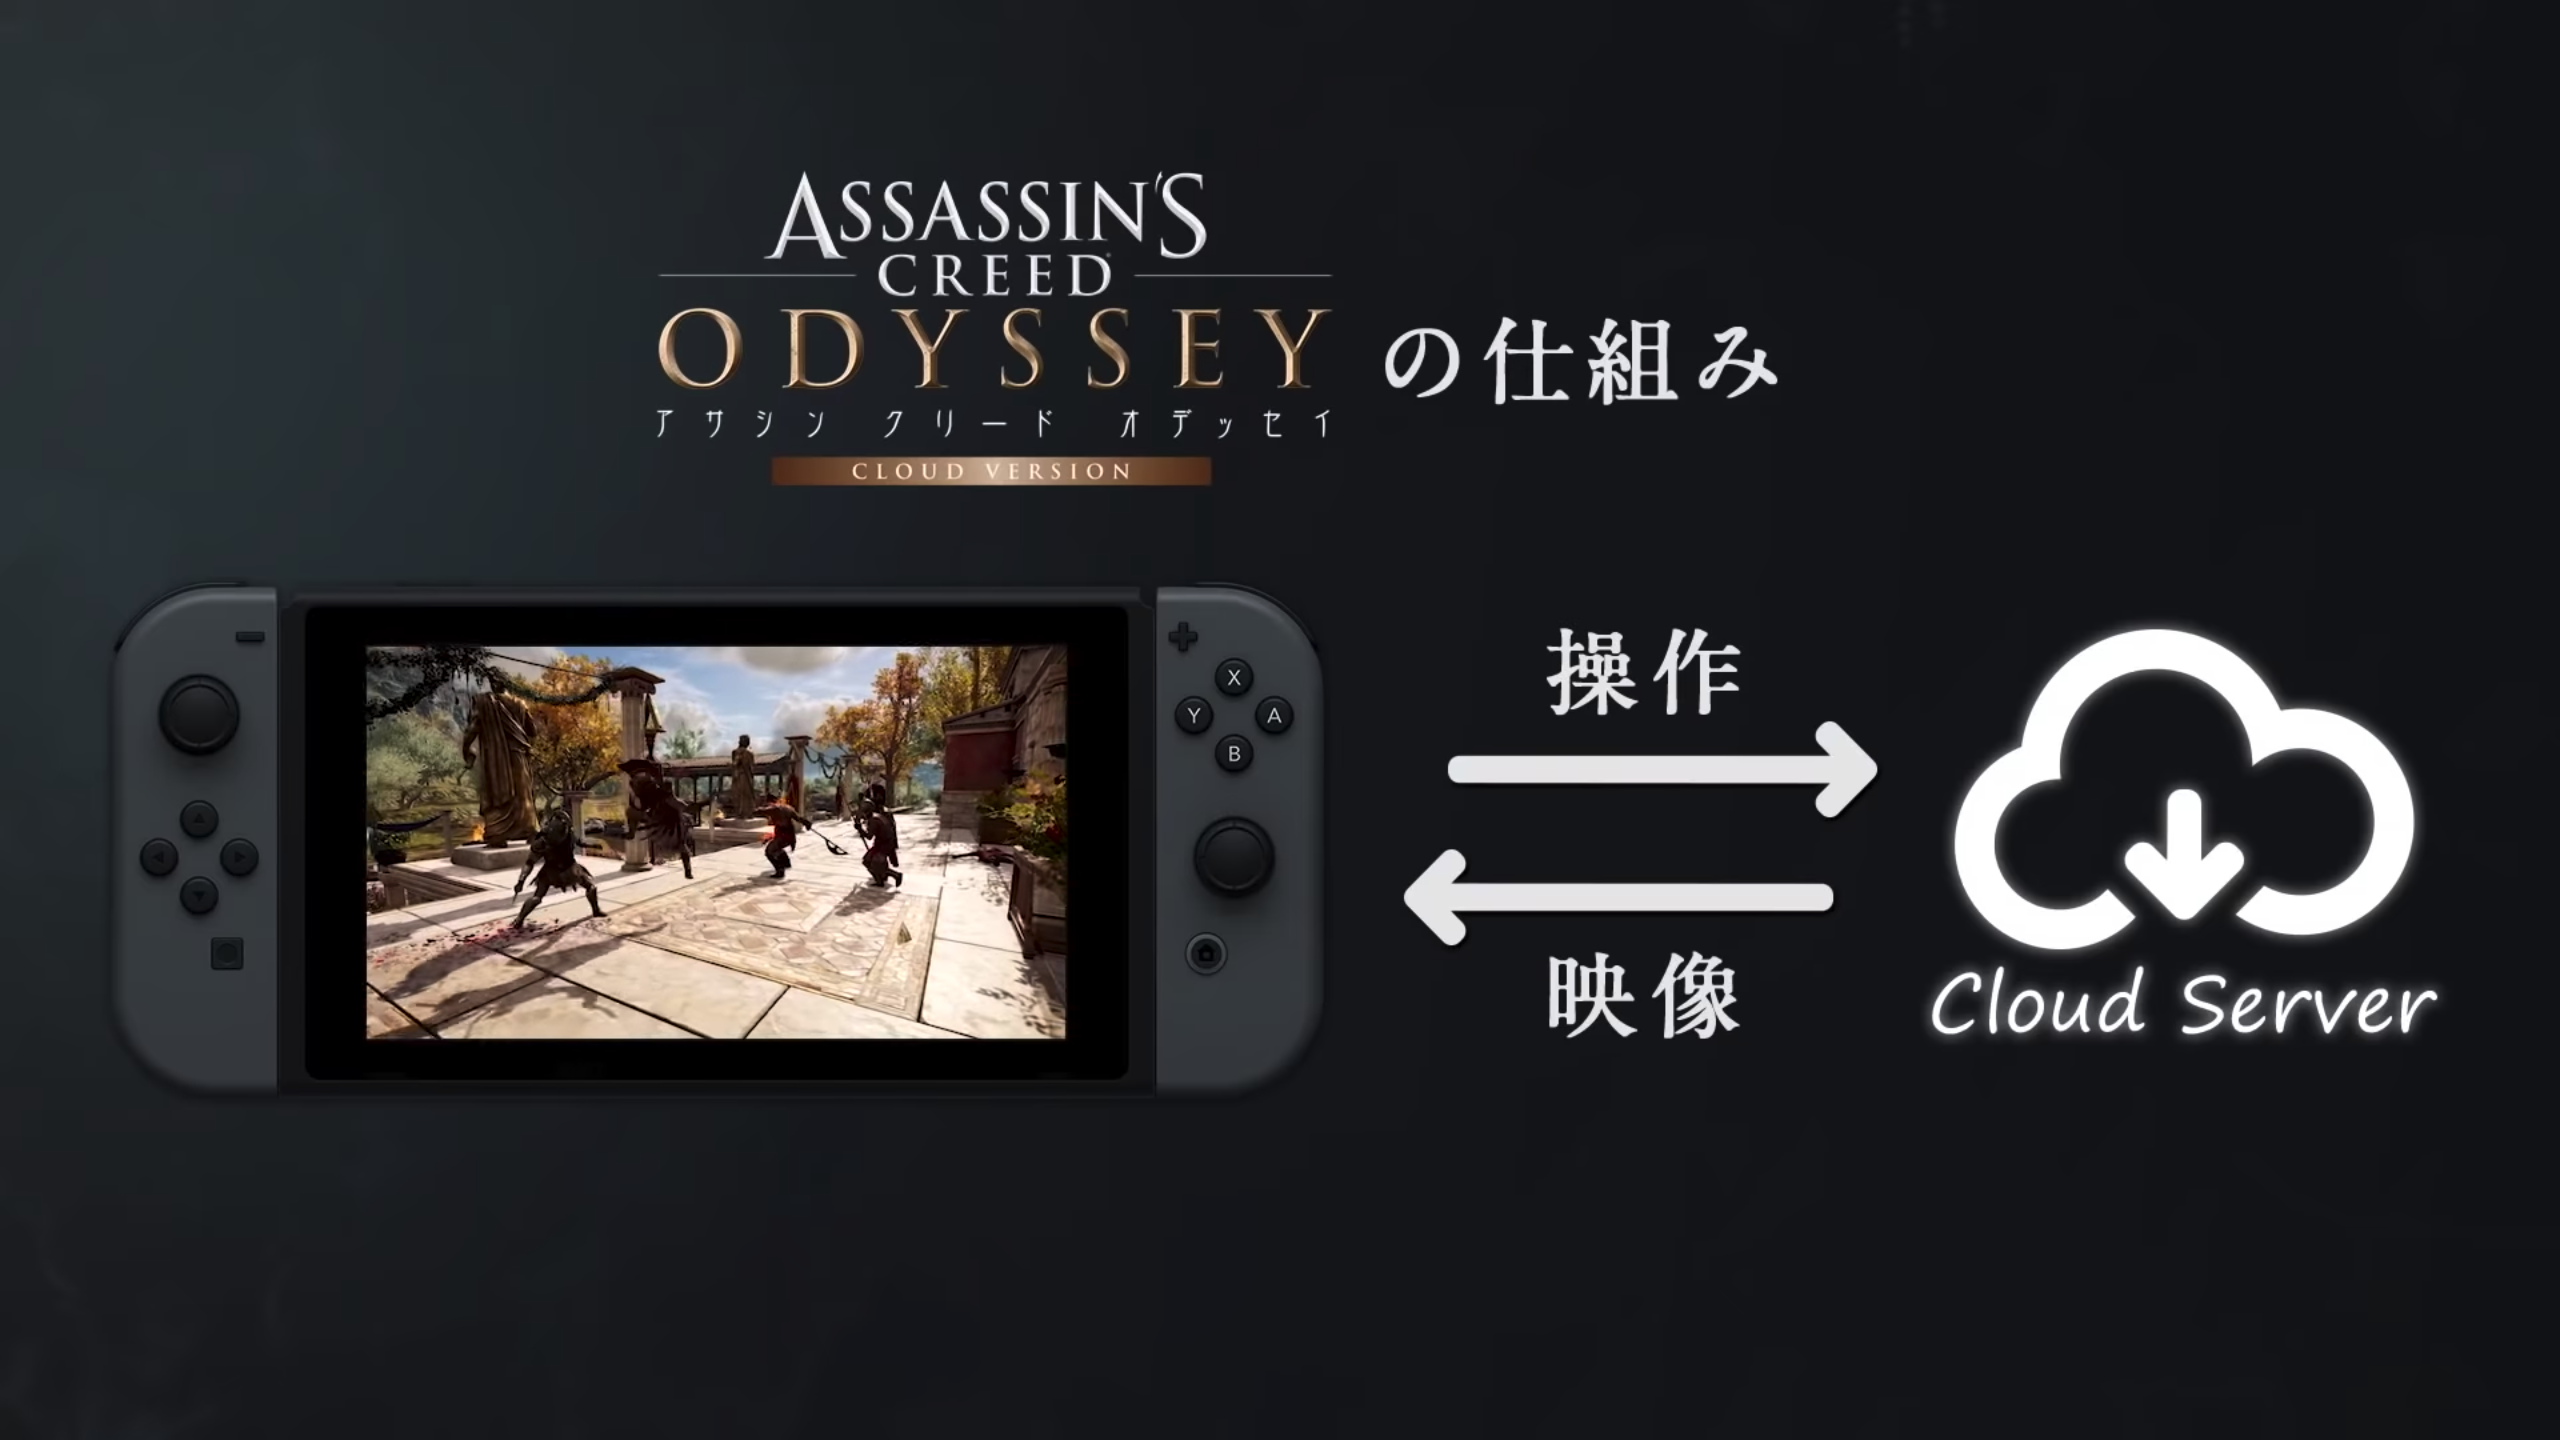 Режимы nintendo switch. Нинтендо свитч ассасин Одиссей. Assassin's Creed Odyssey на Нинтендо свитч. Assassin Odyssey Nintendo Switch игра. Nintendo cloud Gaming.